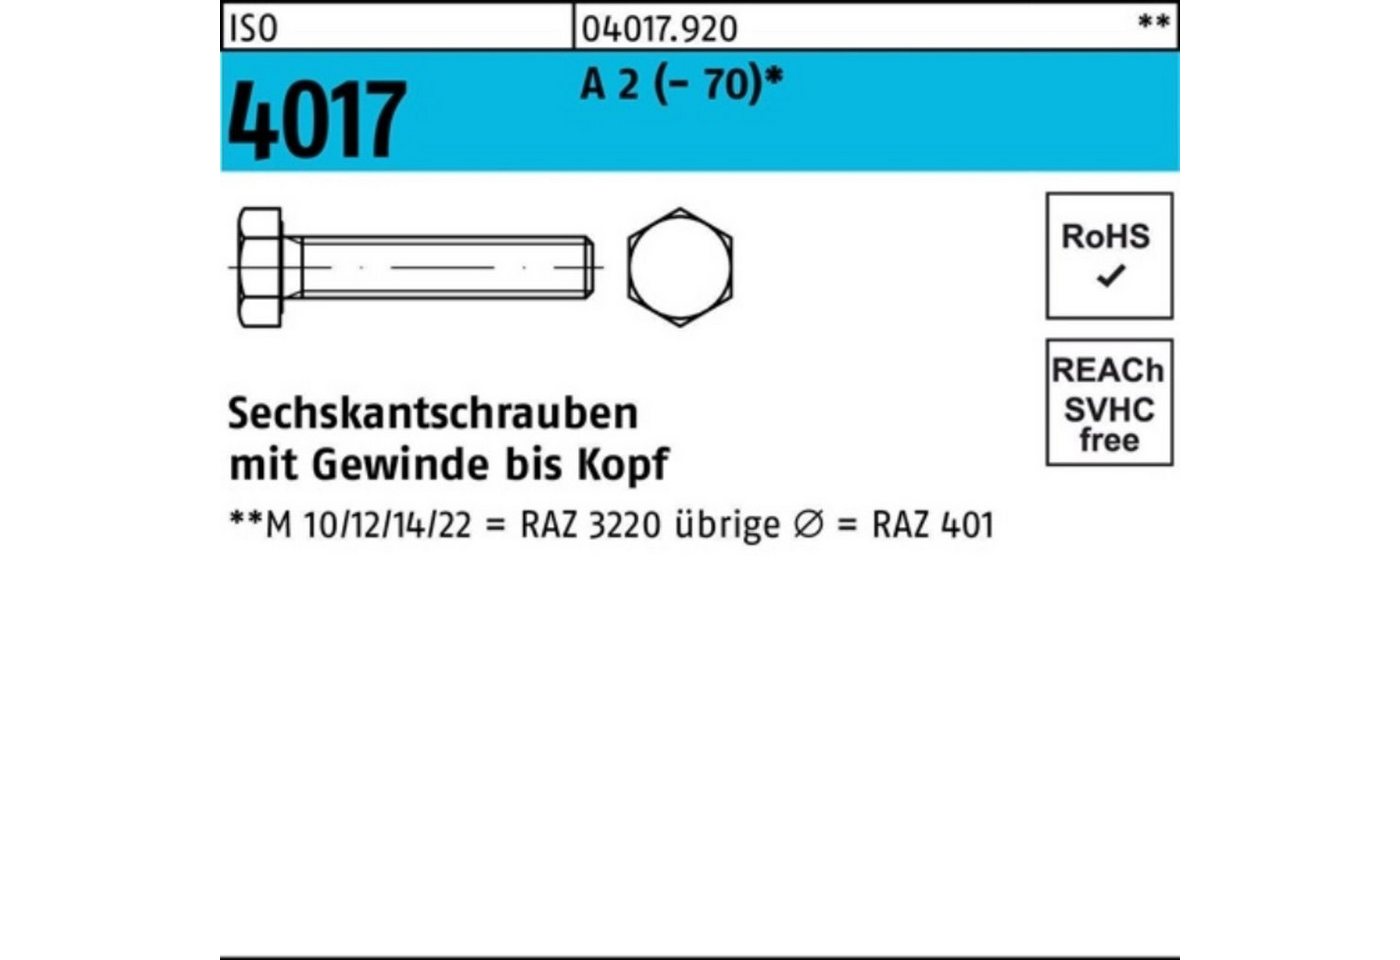 Bufab Sechskantschraube 100er Pack Sechskantschraube ISO 4017 VG M12x 200 A 2 (70) 1 Stück von Bufab